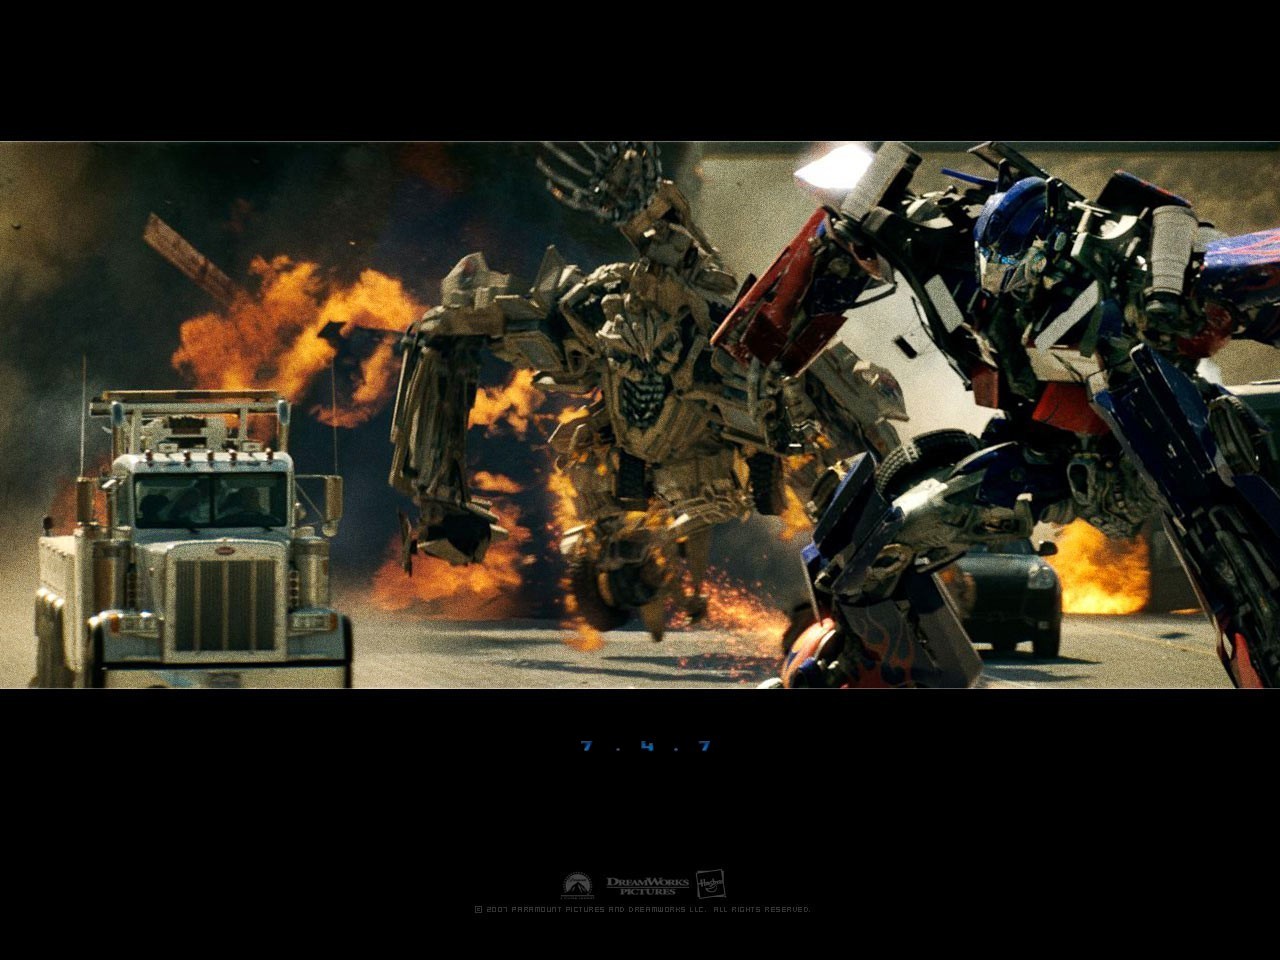 "Transformers Movie" desktop wallpaper (1280 x 960 pixels)